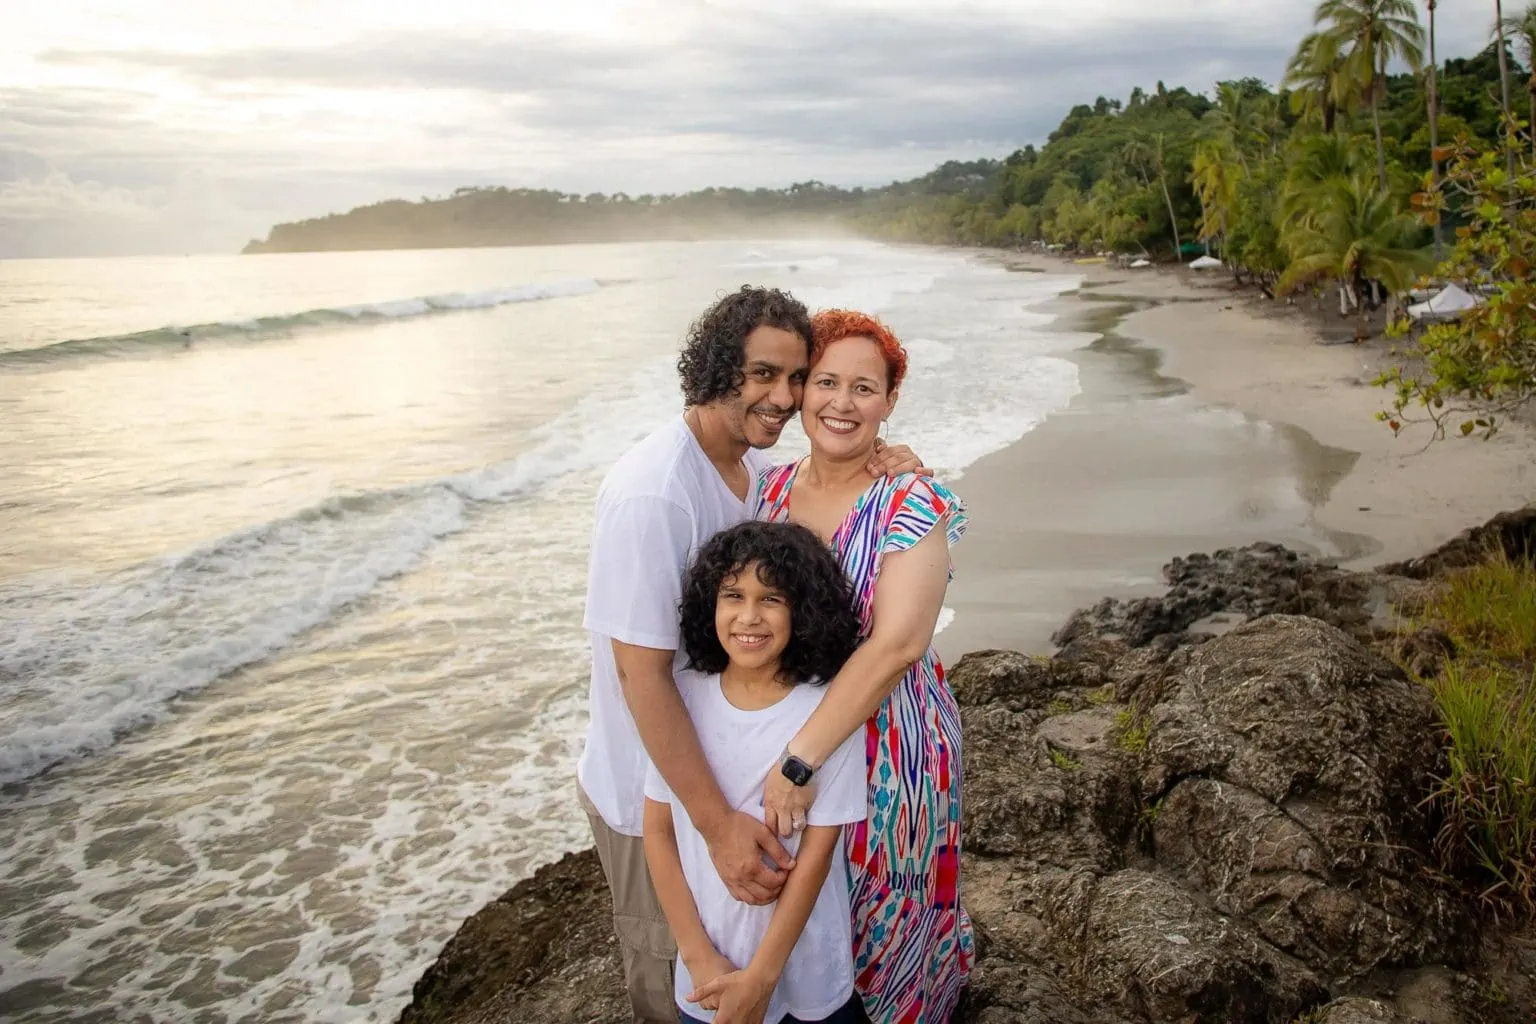 Visiting Costa Rica? Keep Manuel Antonio's beaches on your radar!